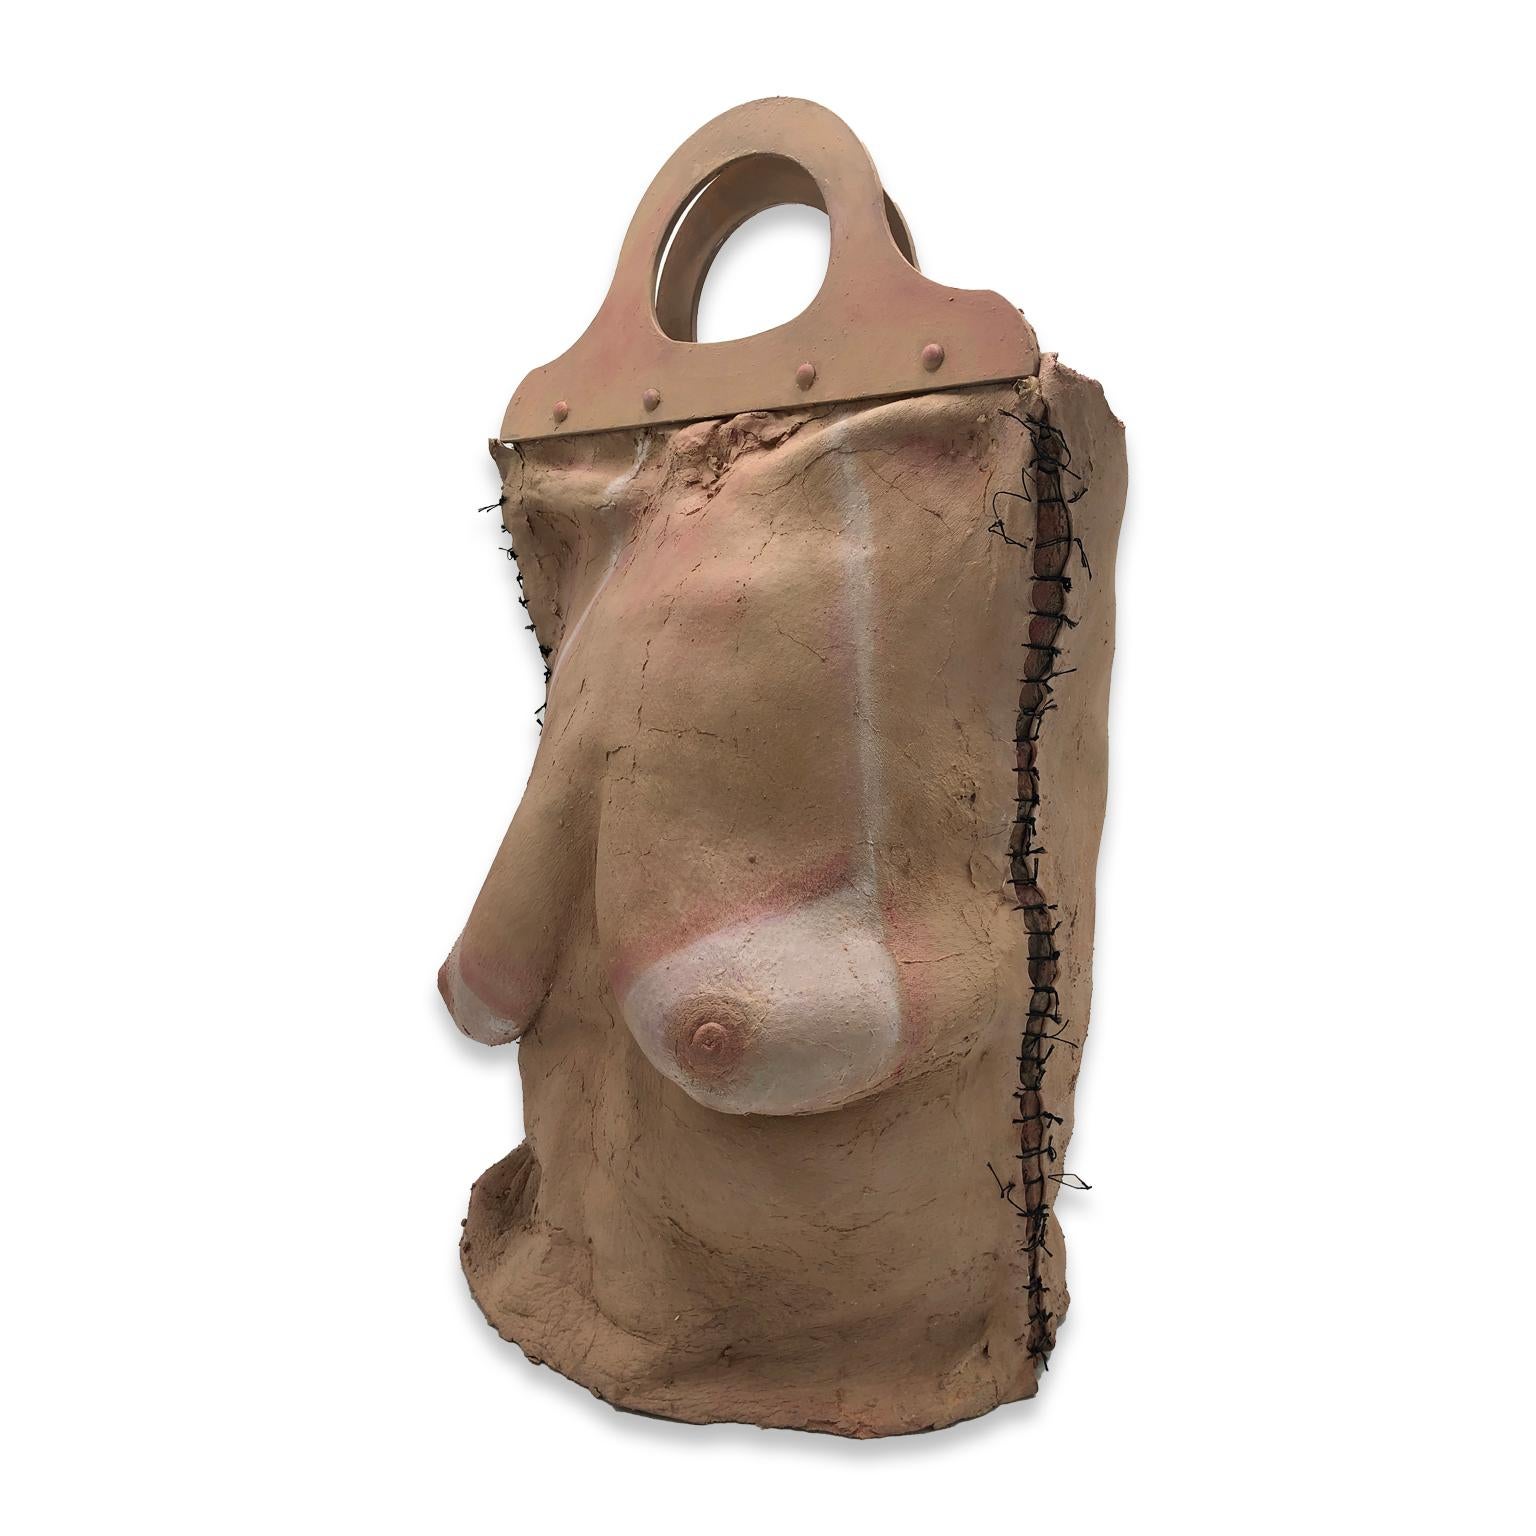 Nude Female Figurative Latex Contemporary Object - Breast Bag III - Sculpture by Miriam Meulepas